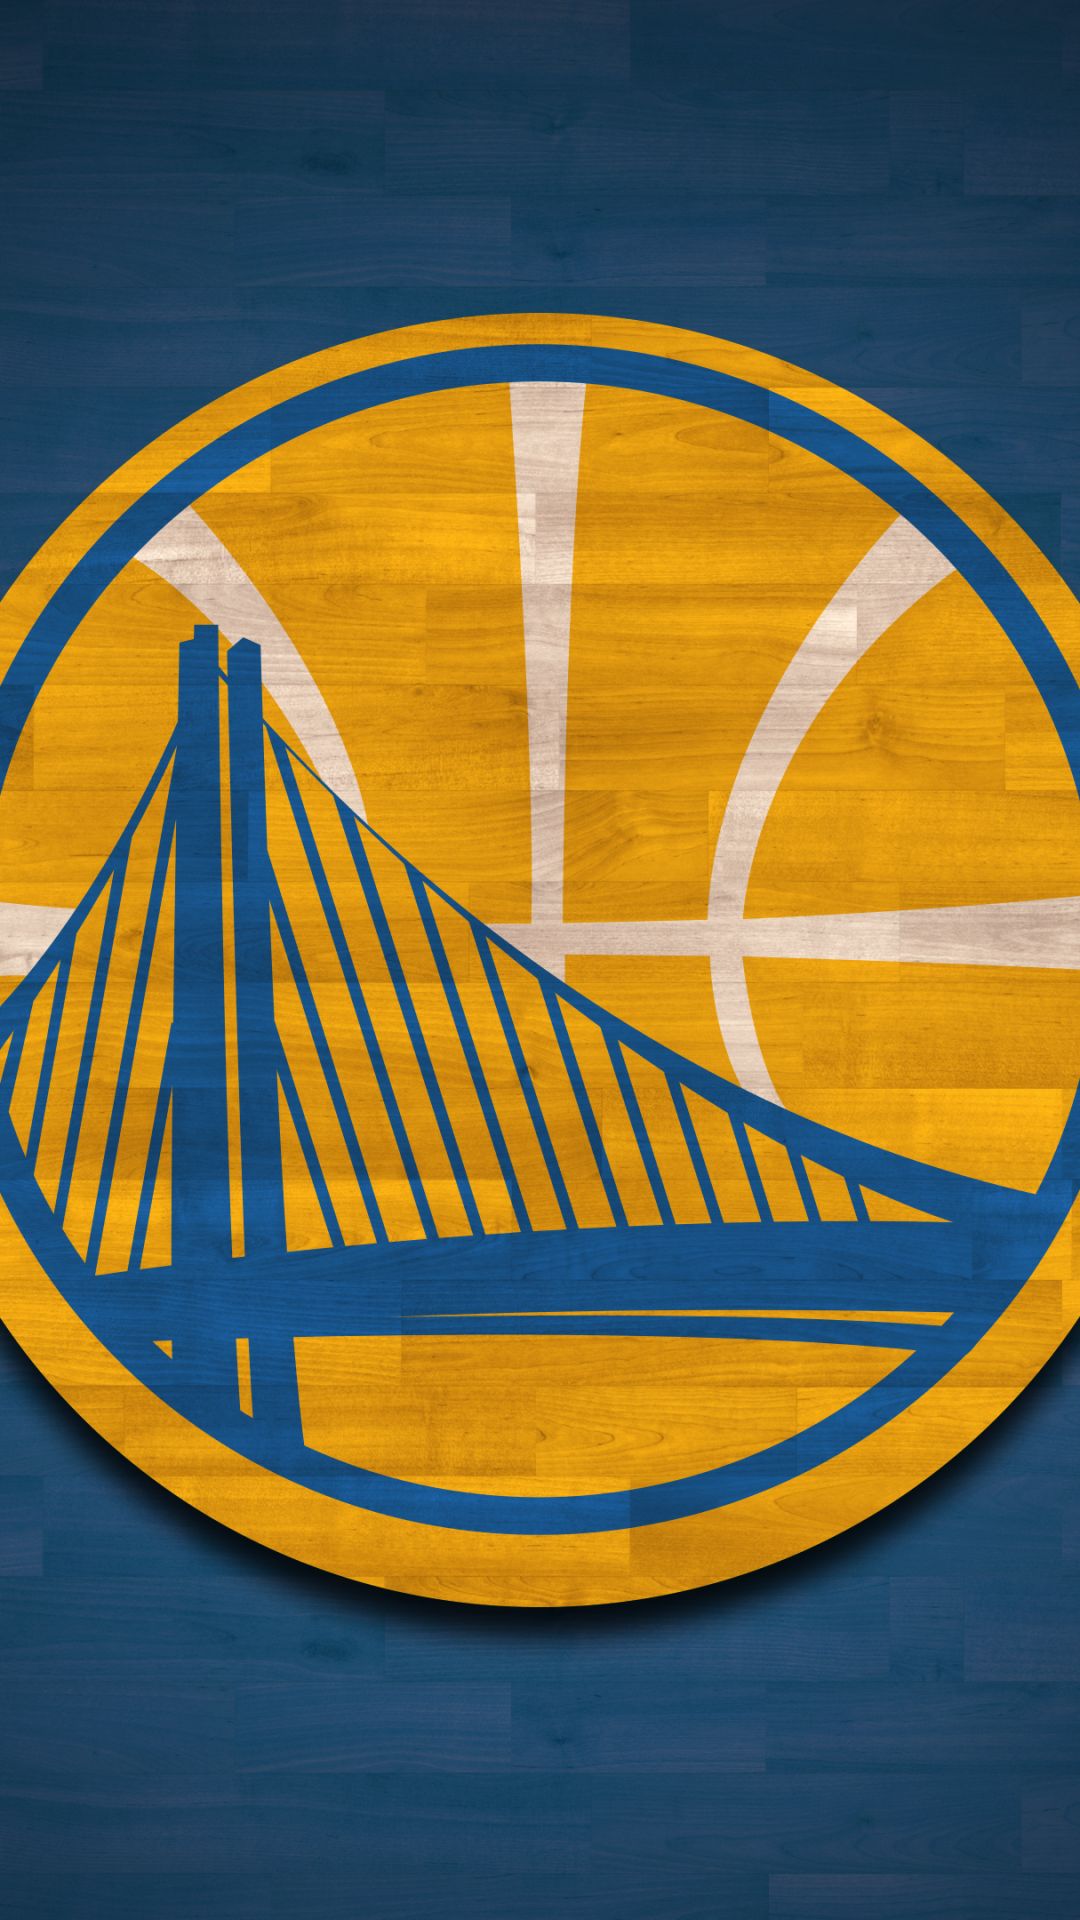 Wallpaper ID 994979  NBA Golden State Warriors Basketball 4K Logo  free download